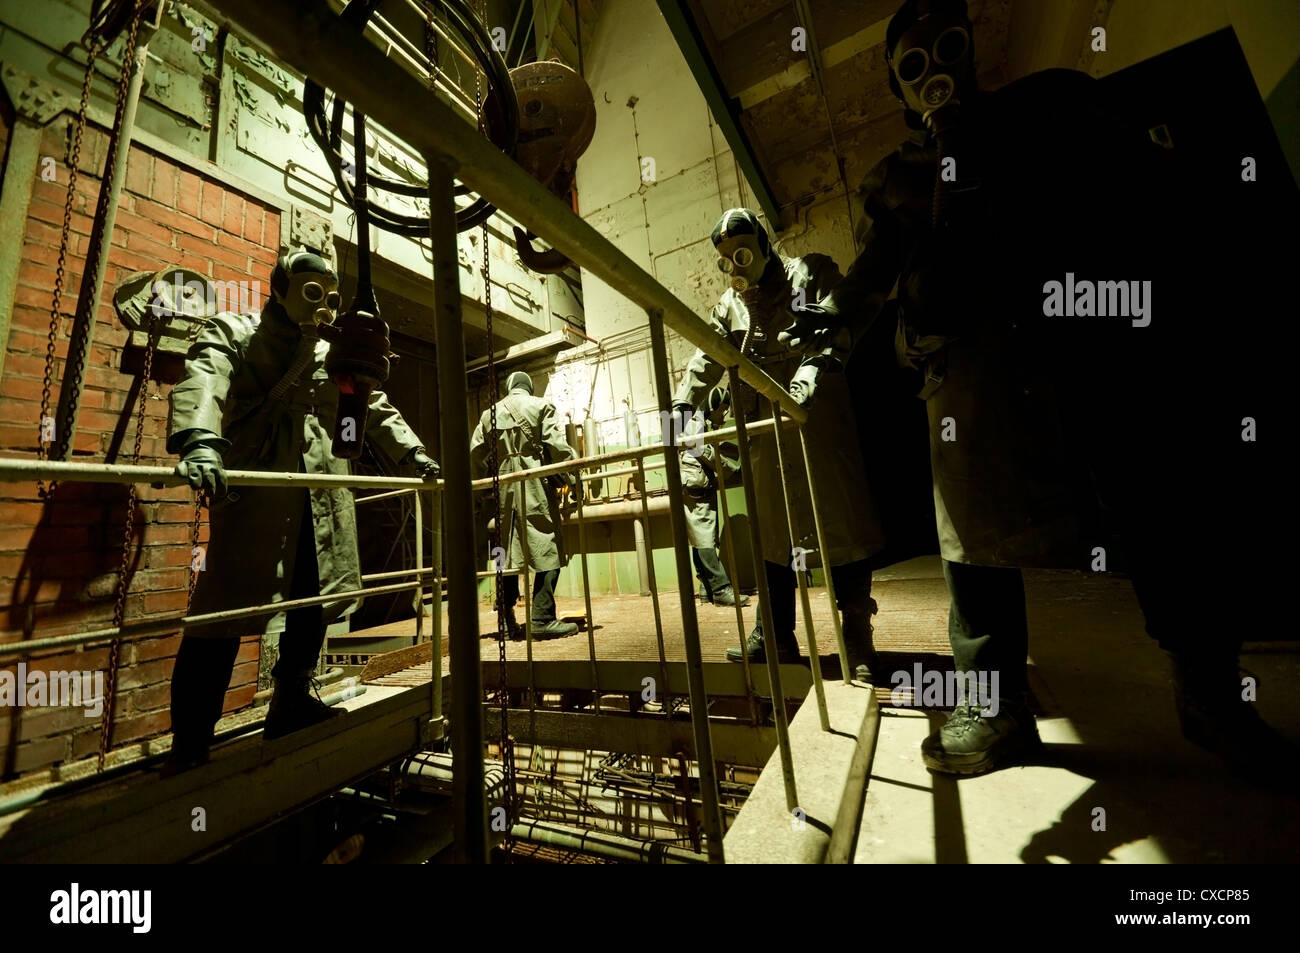 Gas masked menacing men posing in industrial setting Stock Photo